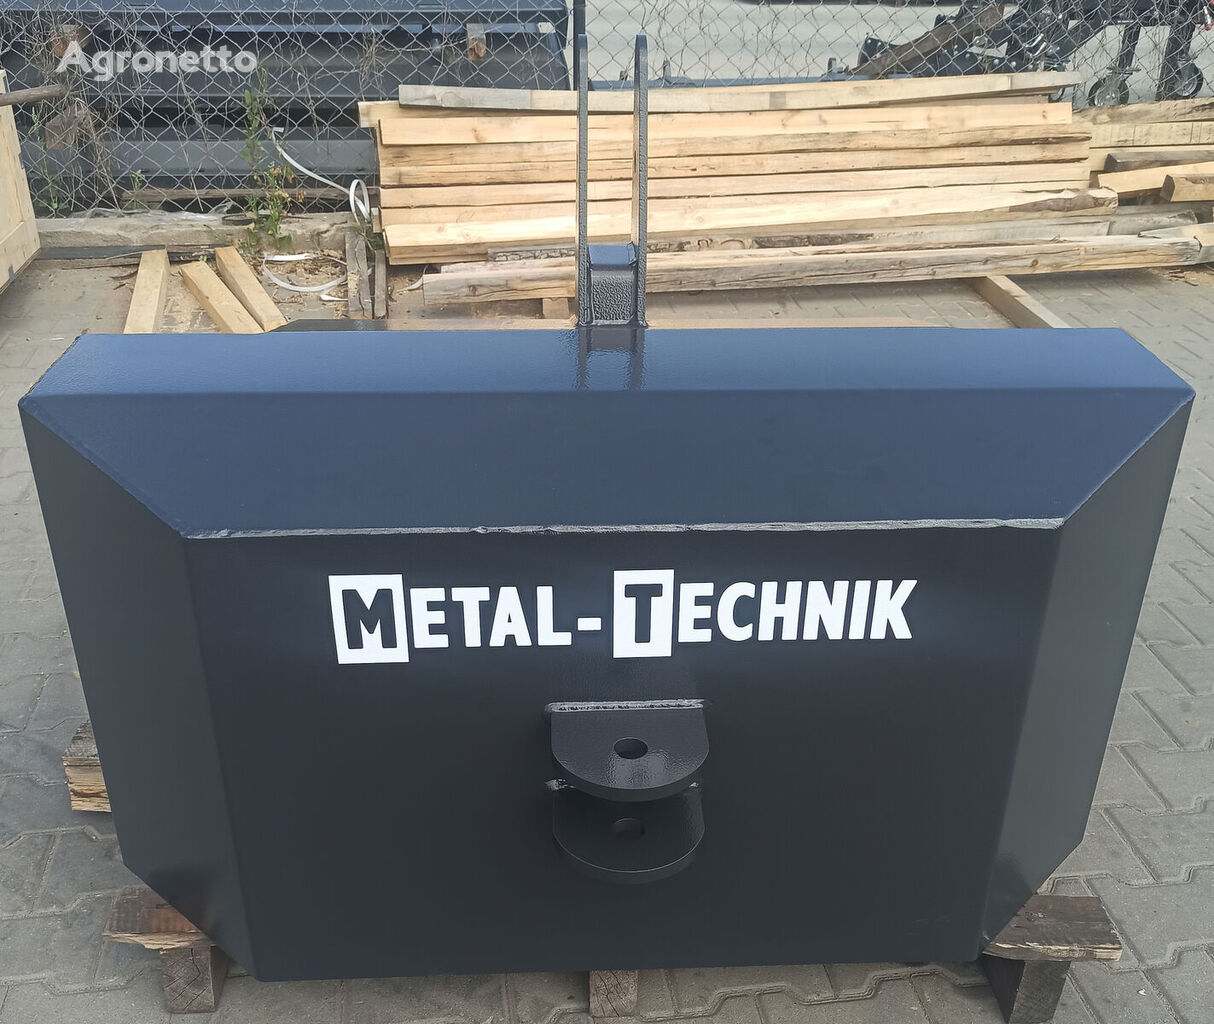 Metal-Technik Ballast / Masse / Zavorra / Utyazhelitel / Obciążnik 800 kg contrapeso nuevo